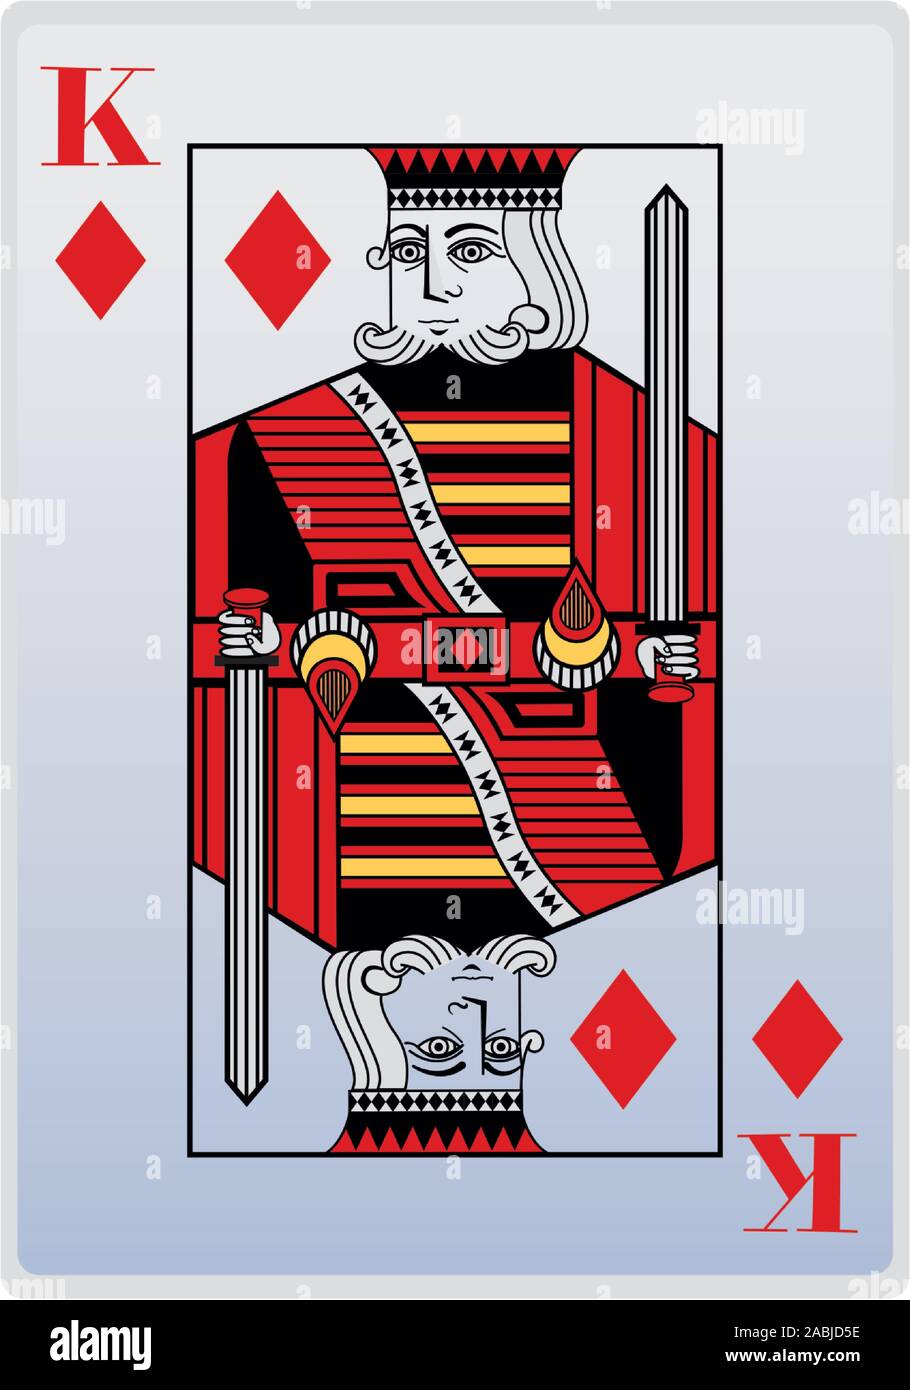 Playing card king diamonds Stock Vector Images - Alamy